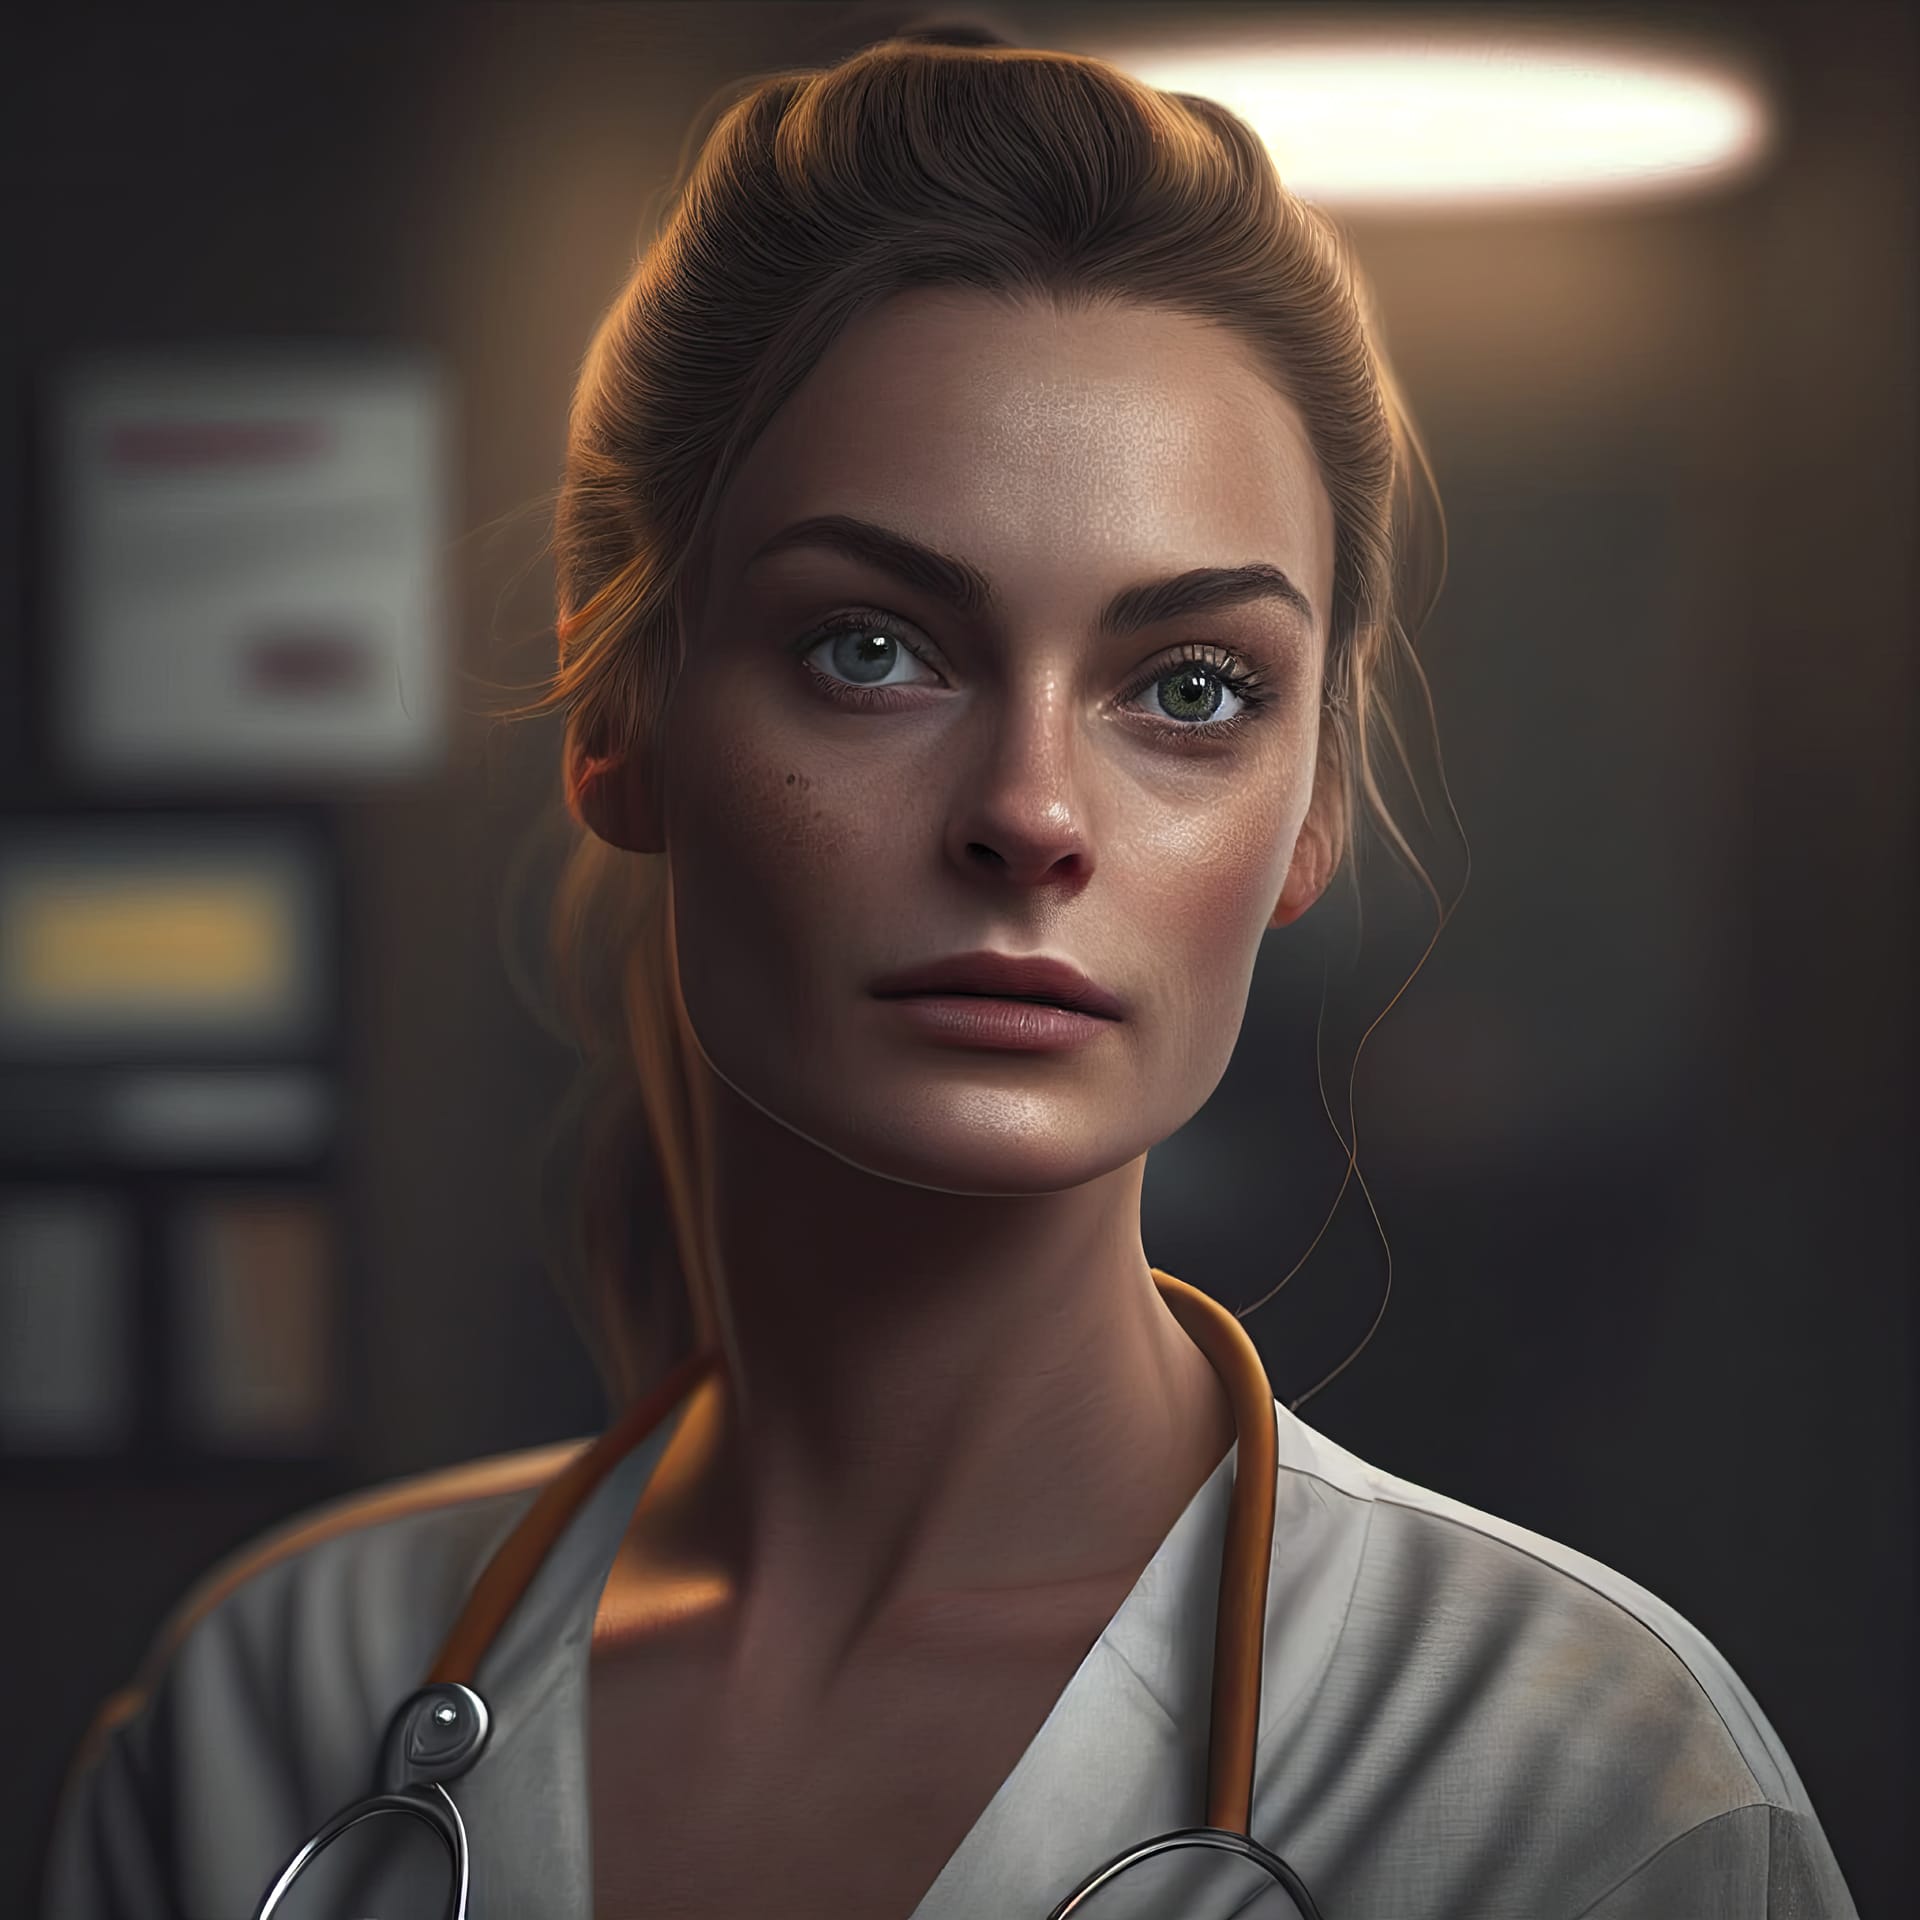 Woman profile picture experienced nurse